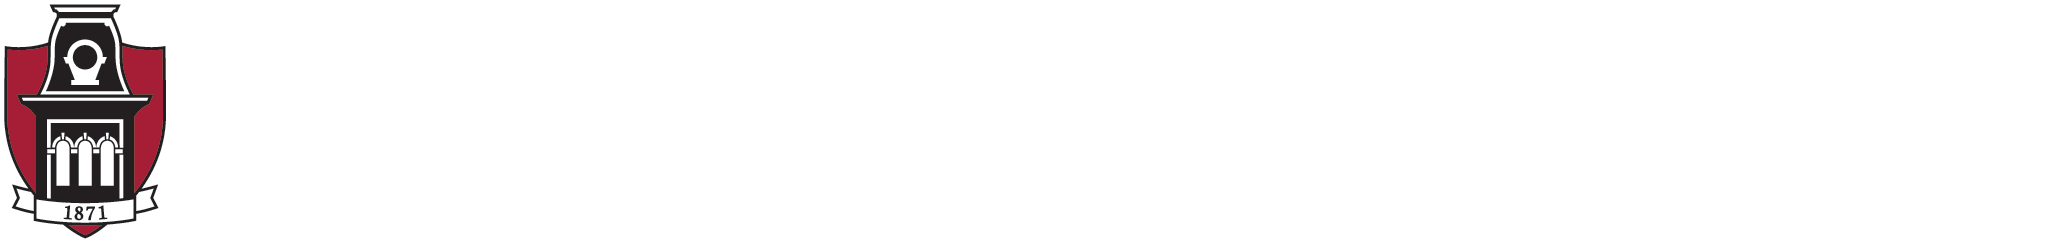 Bookstore Logo - The University Bookstore of A Bookstore